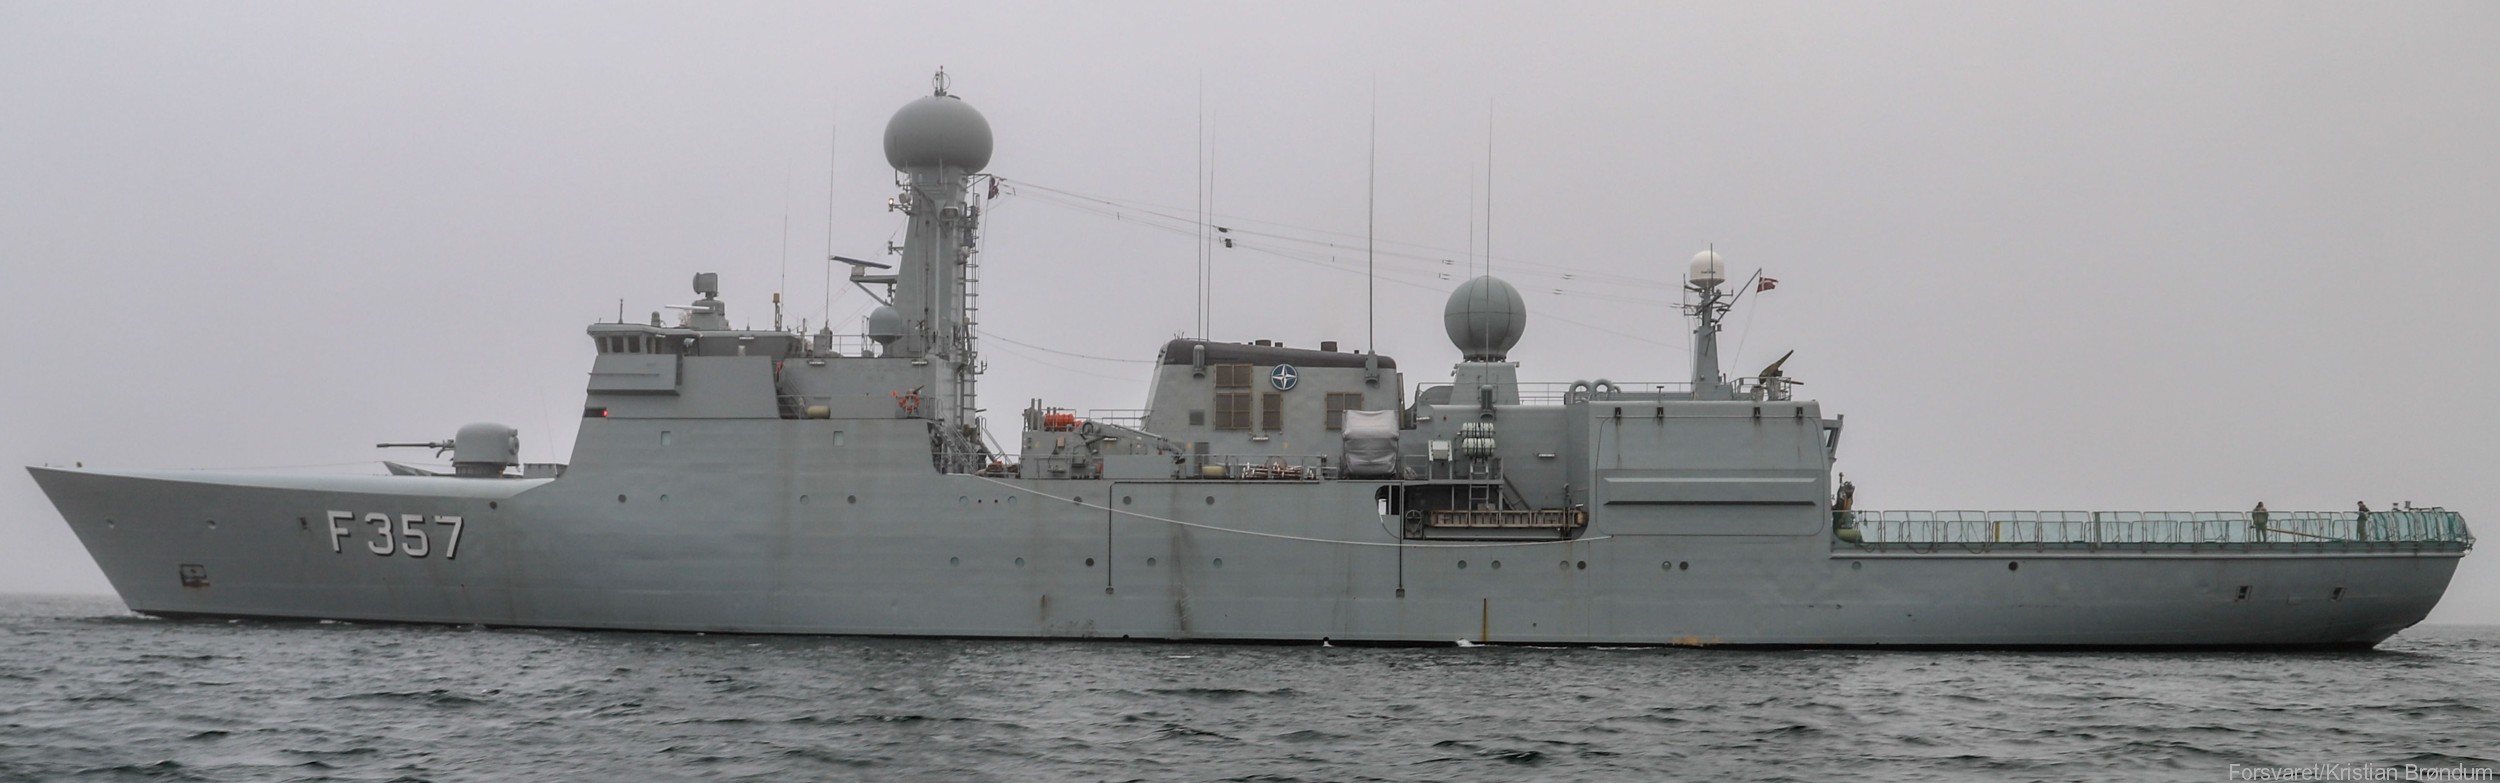 f-357 hdms thetis ocean patrol frigate royal danish navy kongelige danske marine inspektionsskibet 22